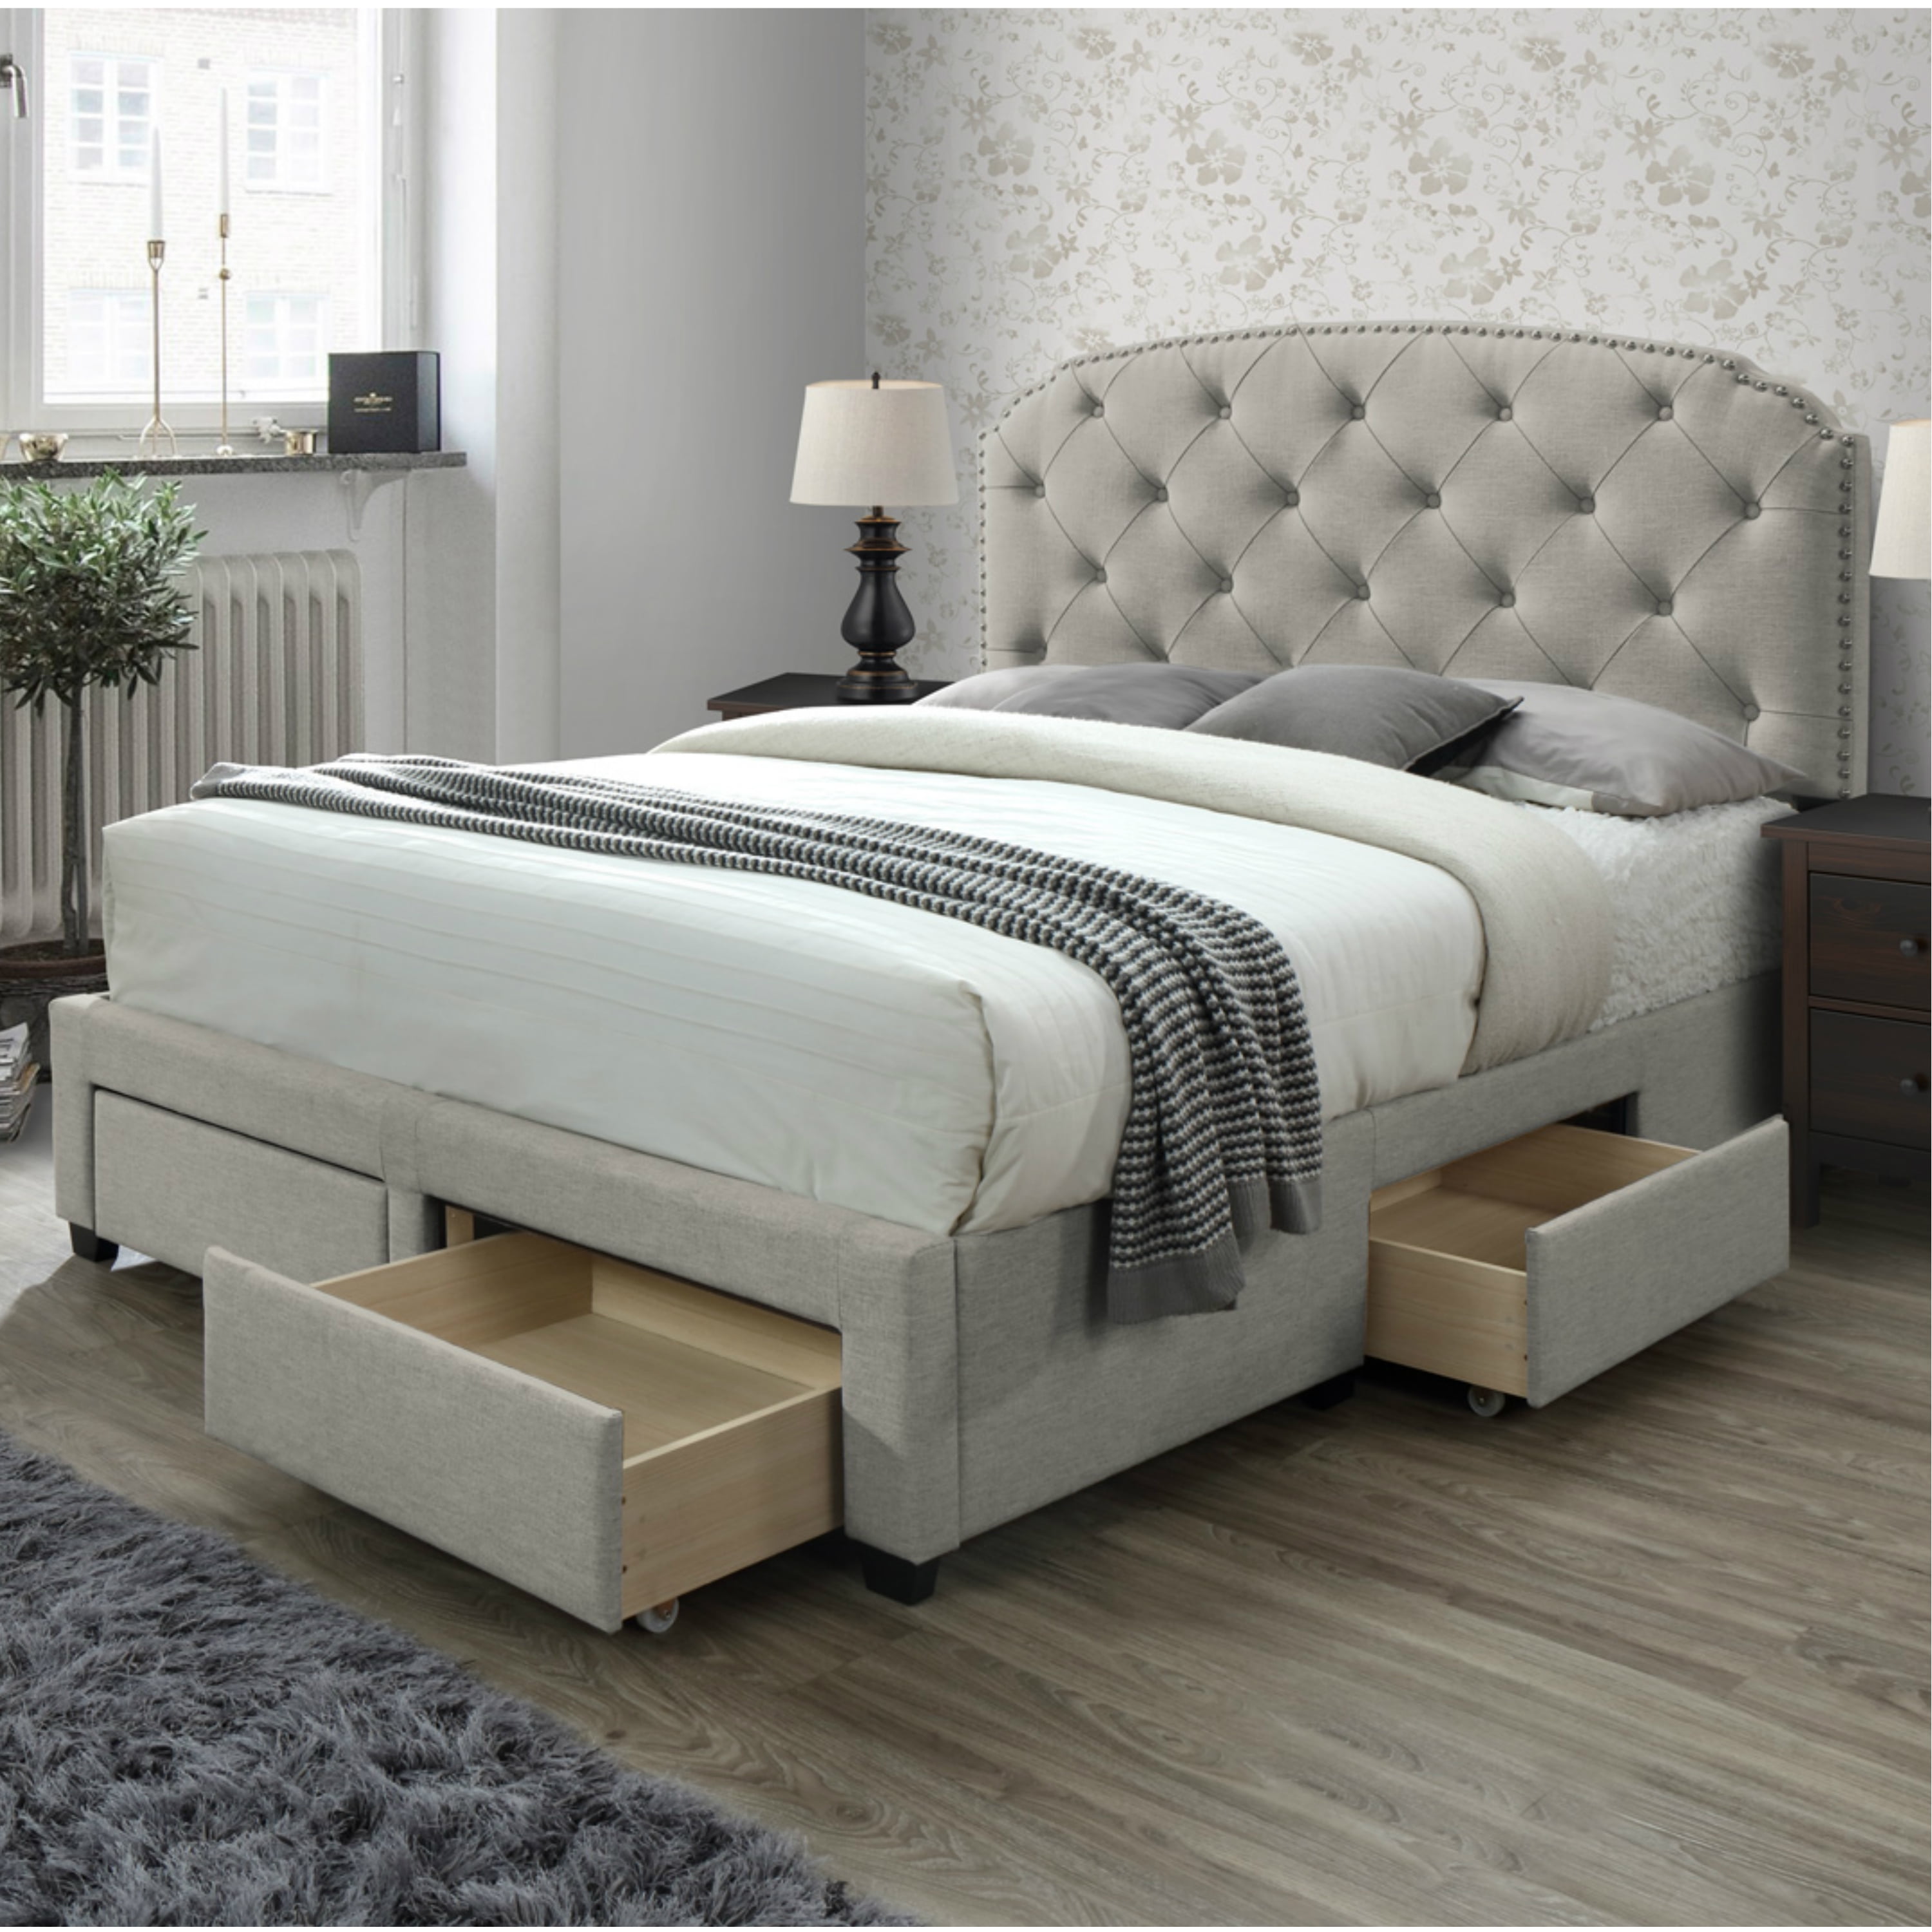 Dg Casa Argo Tufted Upholstered Panel, King Bed Frame With Shelves